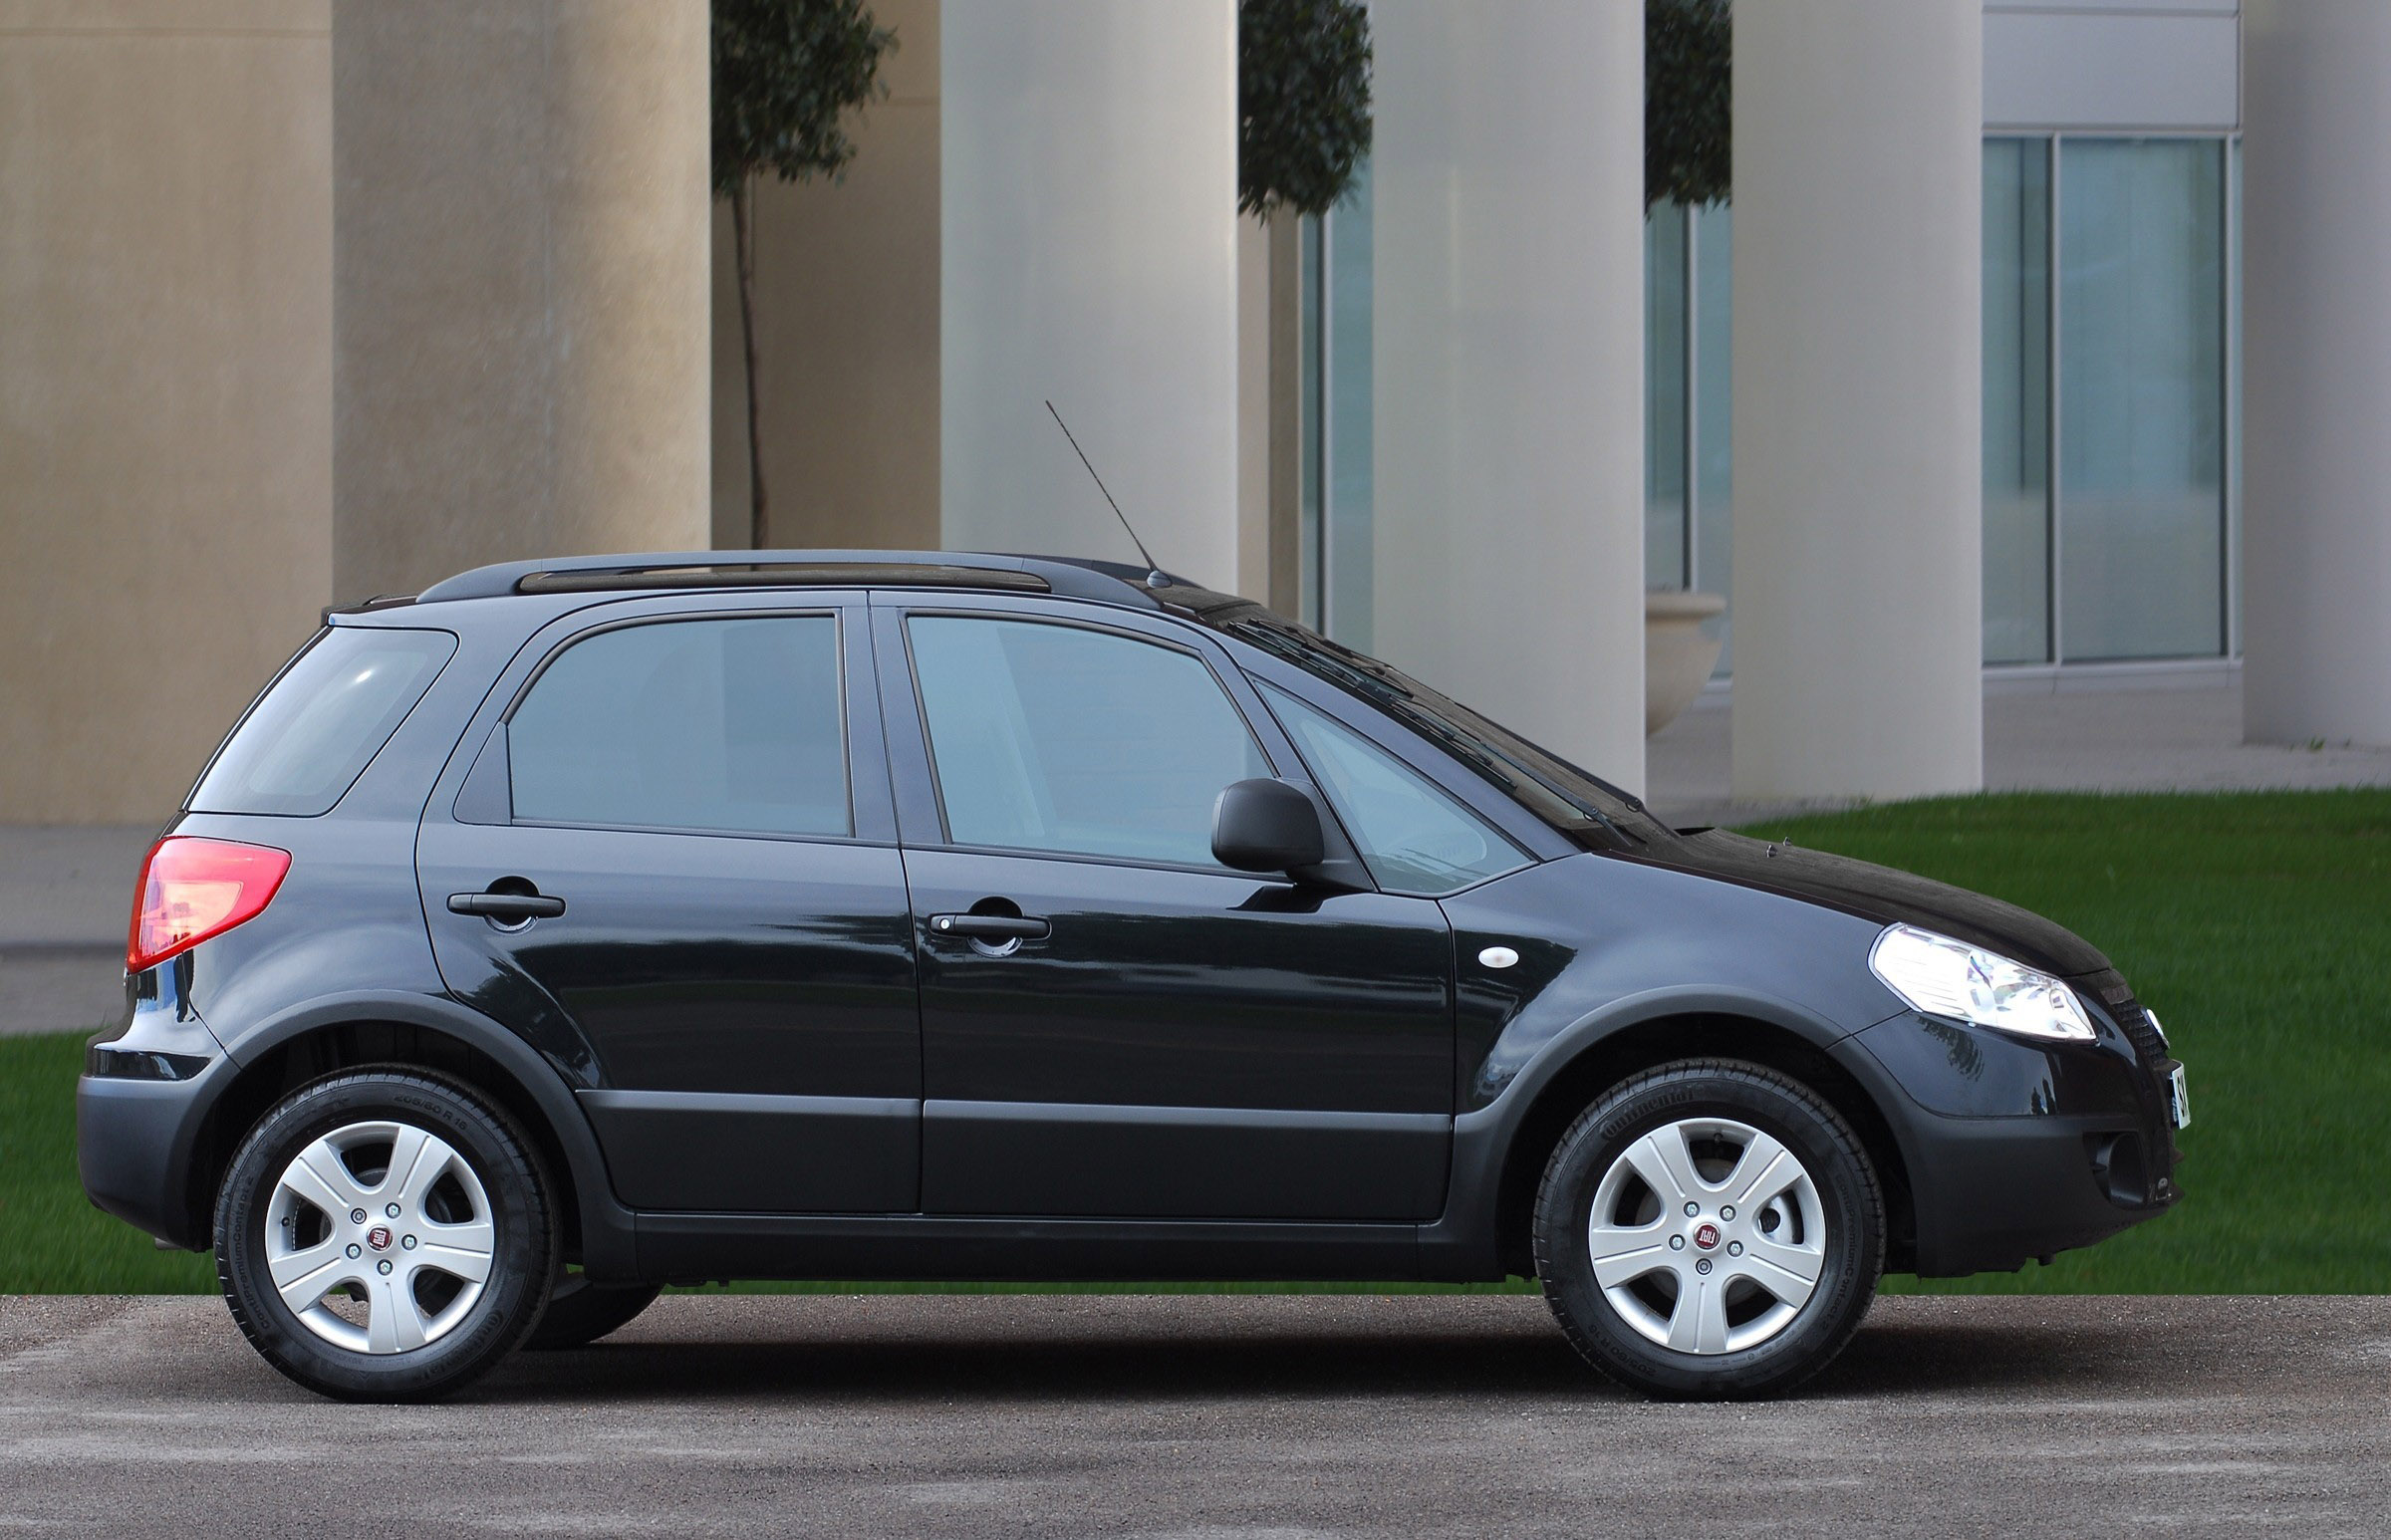 Fiat Sedici 1.6 16V (2008) - Hd Picture 3 Of 4 - #52621 - 2400X1546